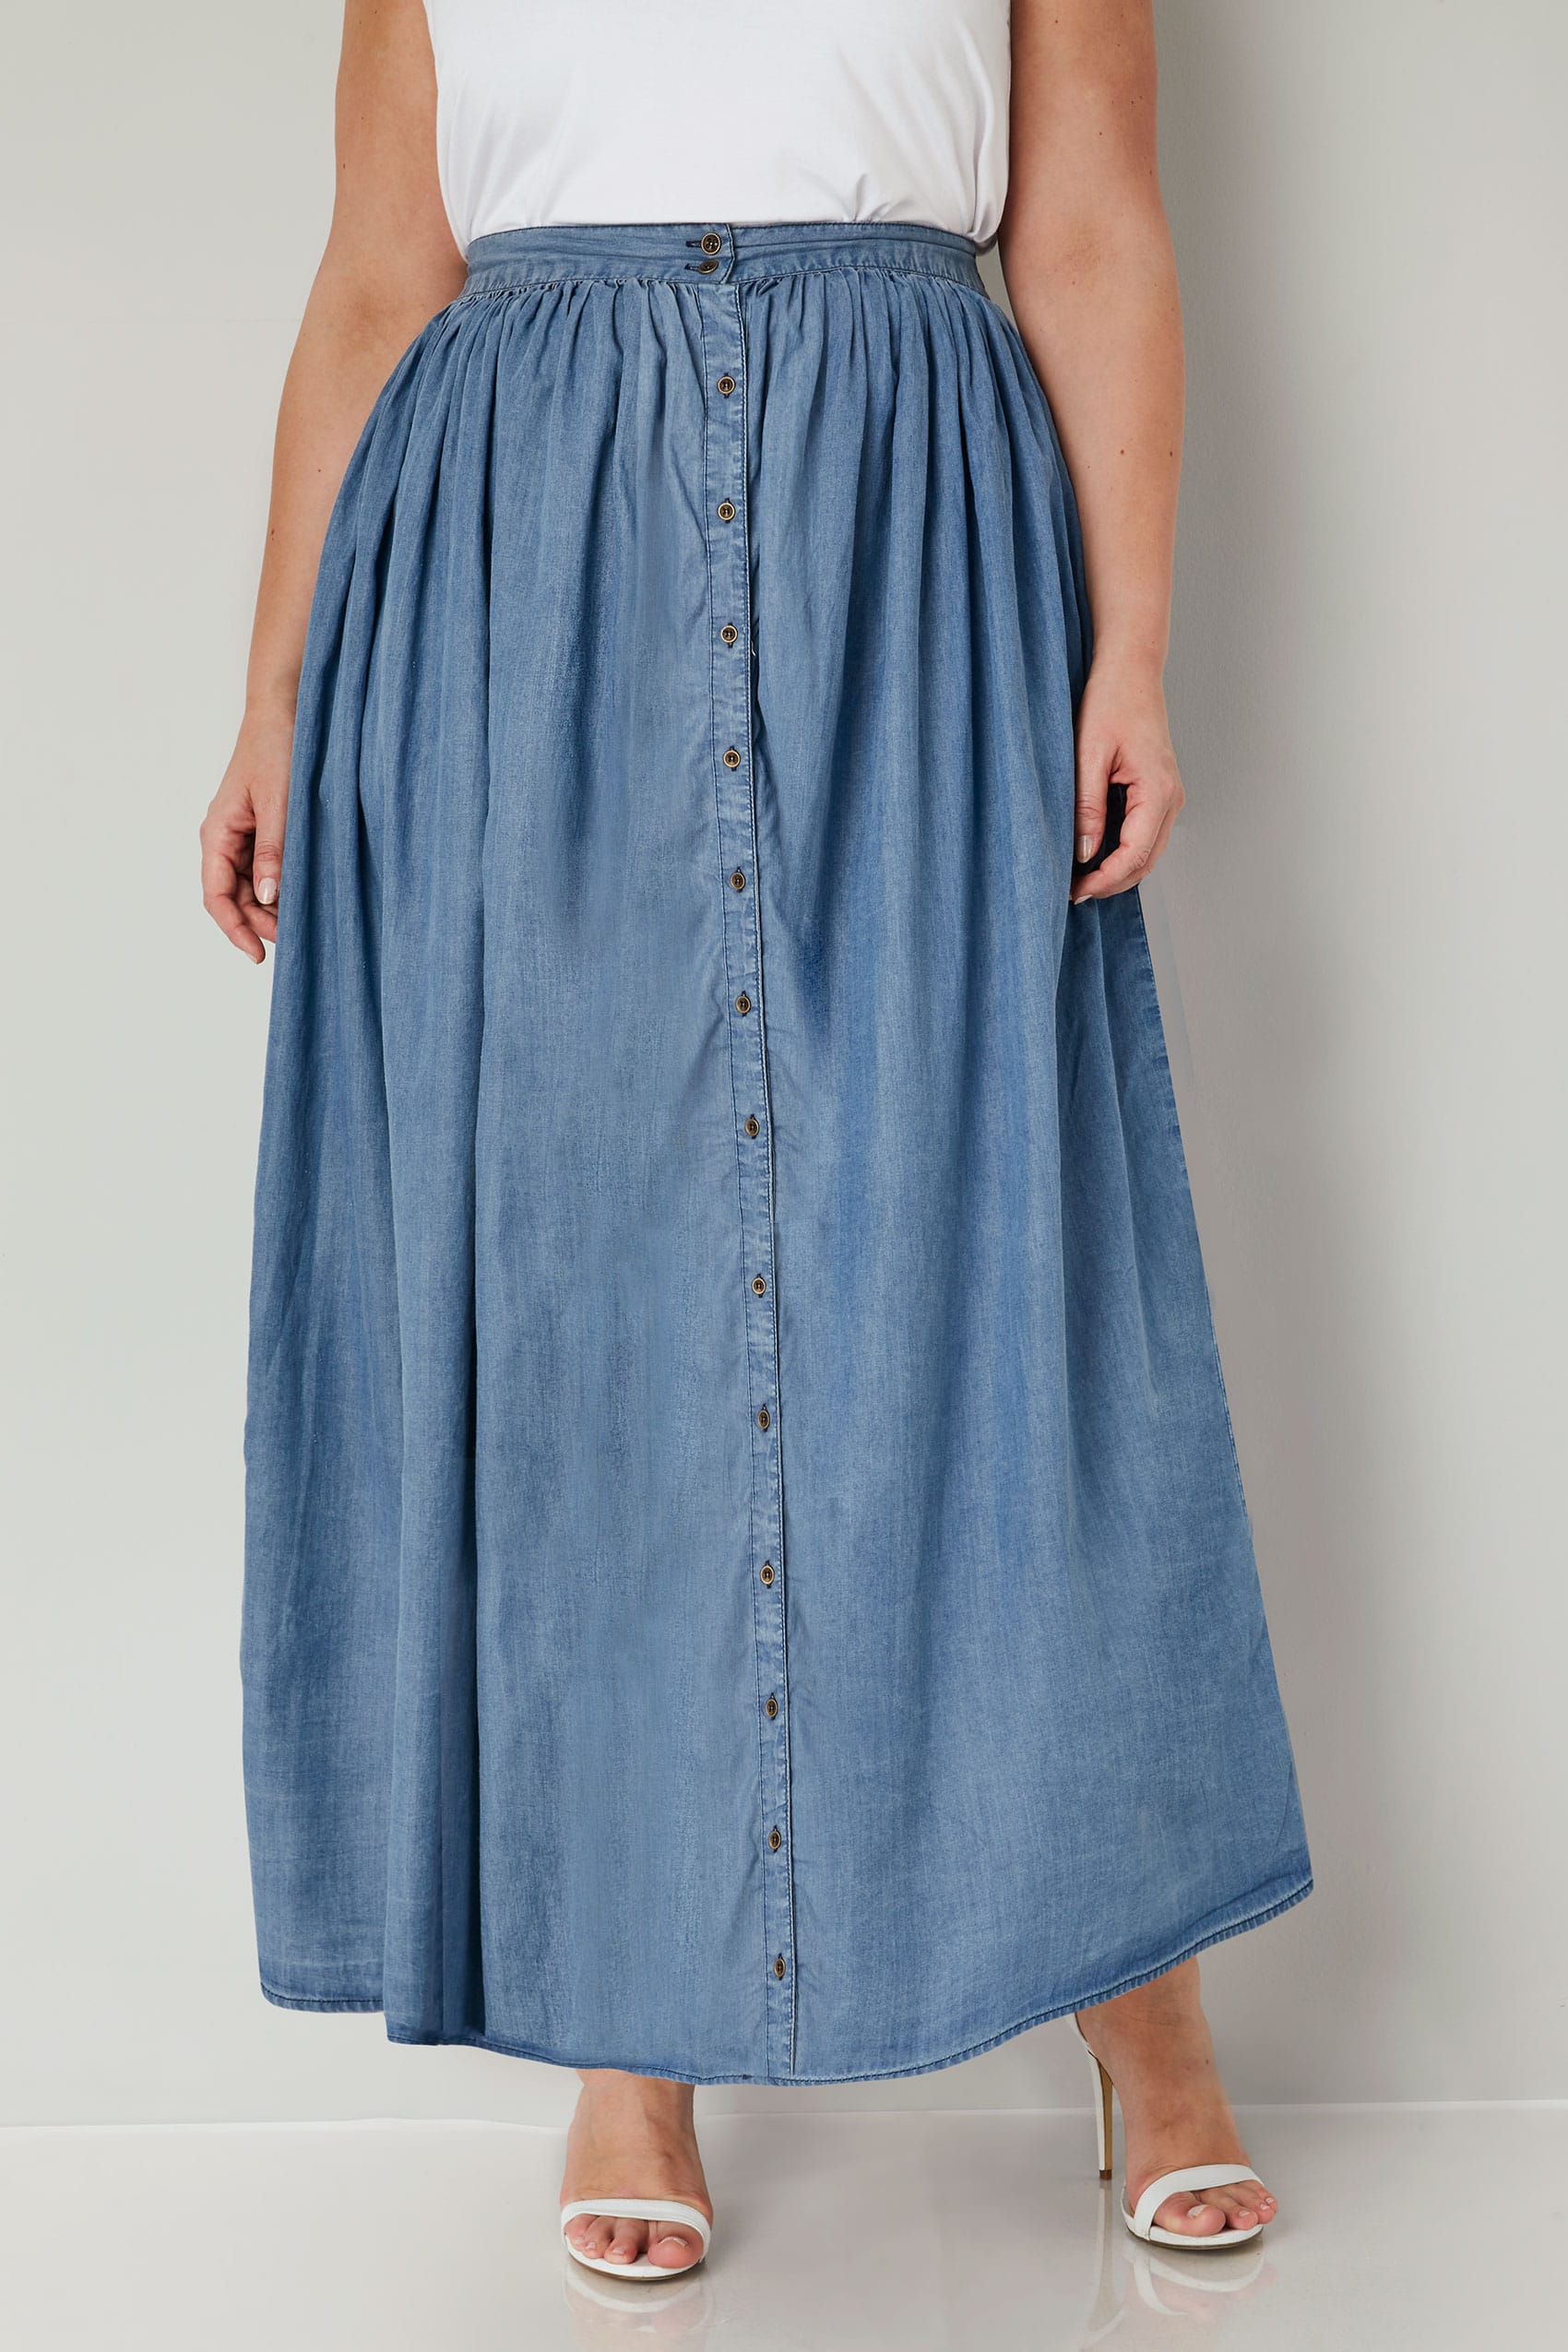 Yours London Denim Blue Tencel Maxi Skirt Plus Size 16 To 32